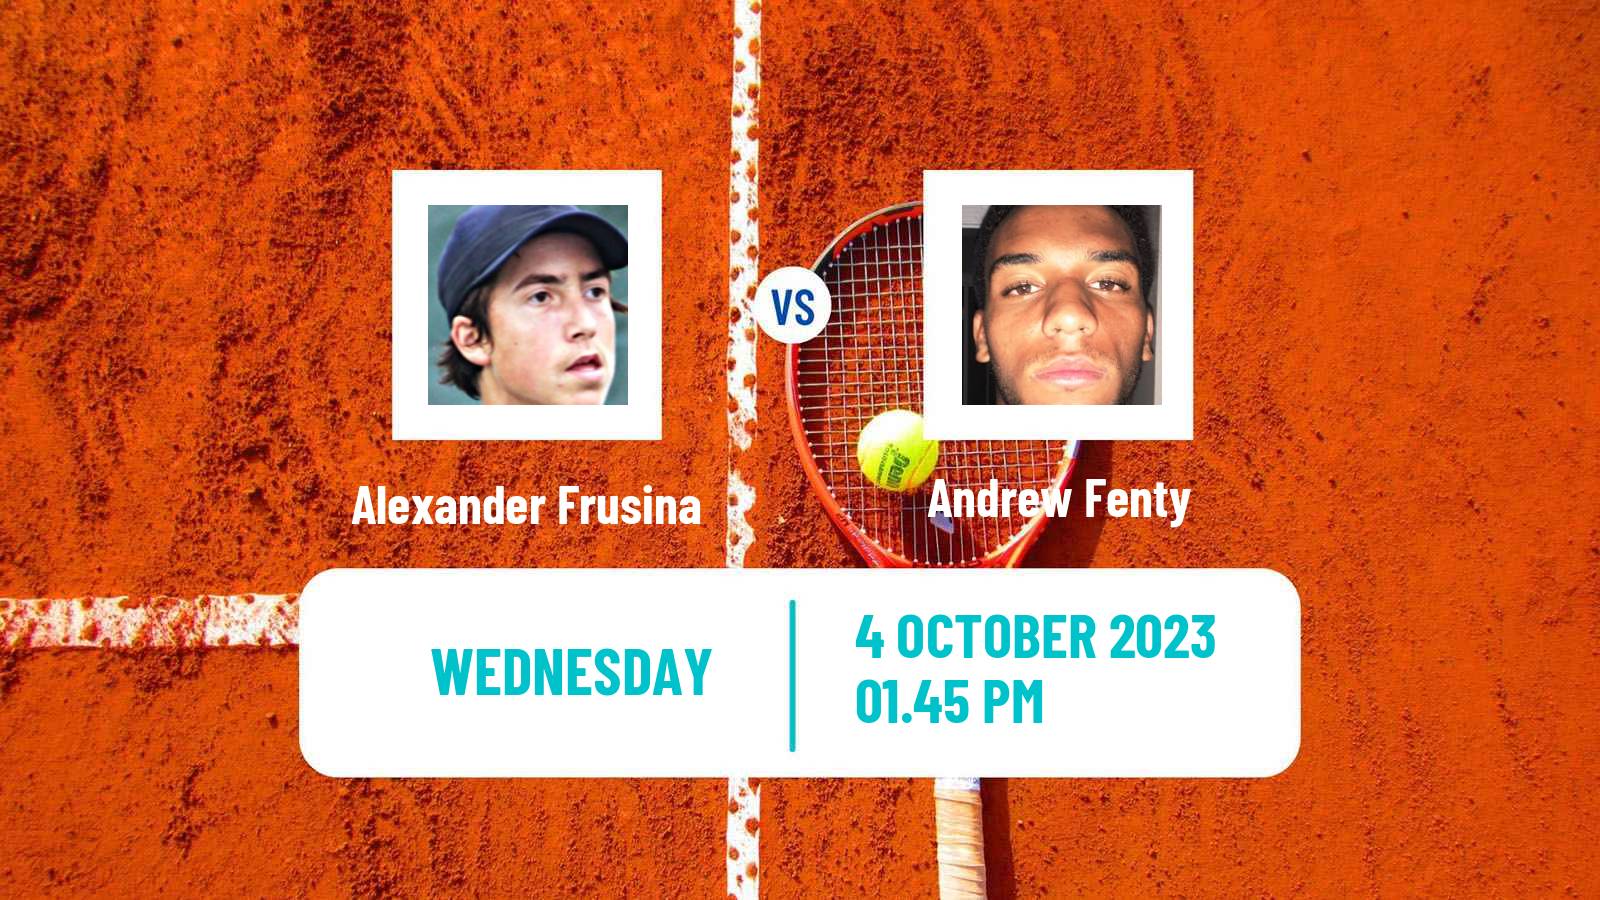 Tennis ITF M15 Ithaca Ny 2 Men Alexander Frusina - Andrew Fenty